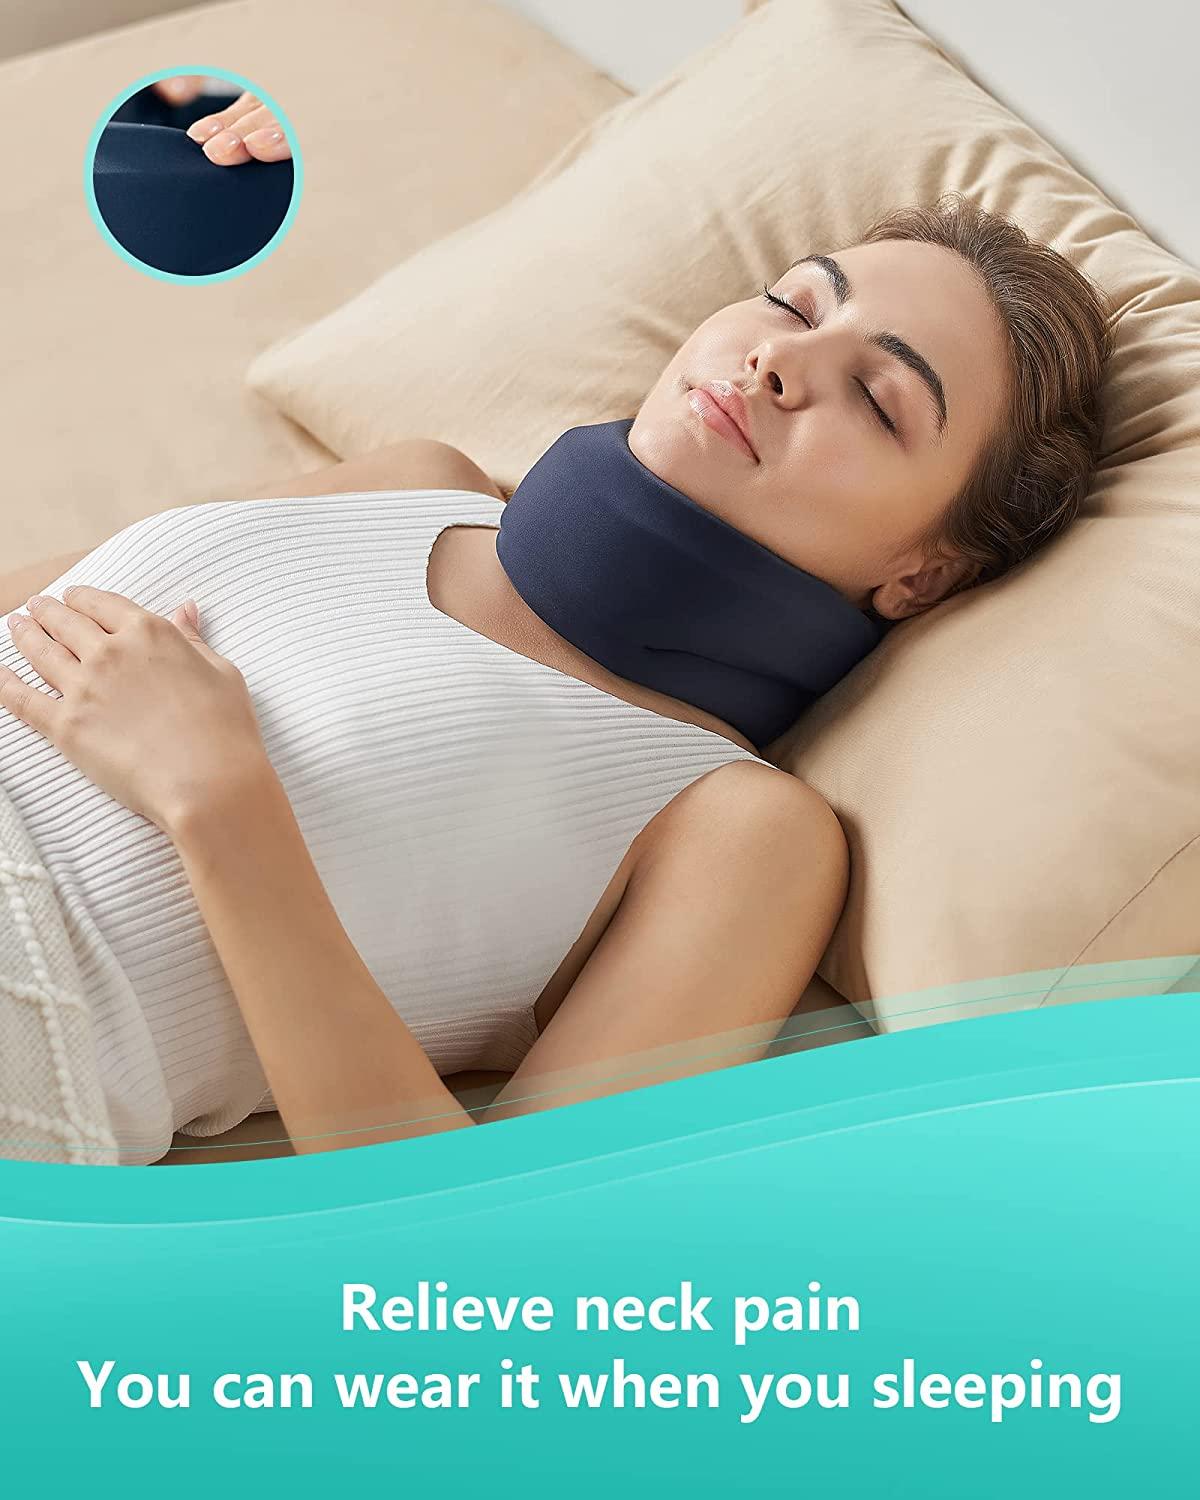 Cervical Spine Support for Better Sleep